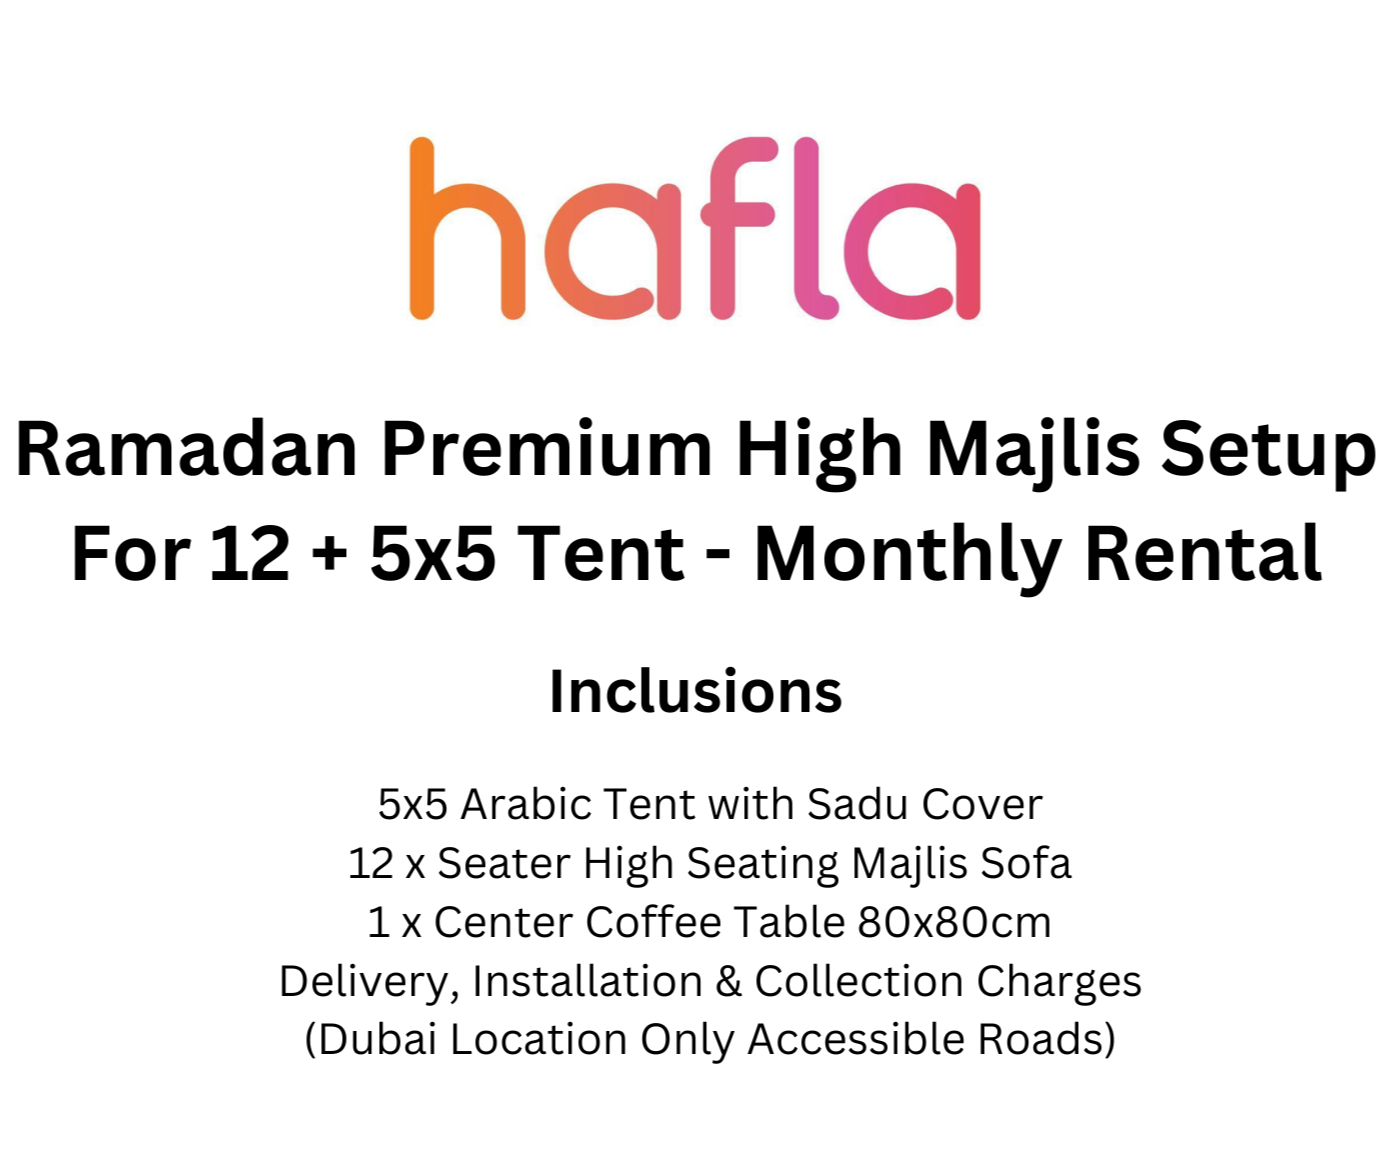 Ramadan Premium Majlis Setup For 12 + 5x5 Tent - Monthly Rental